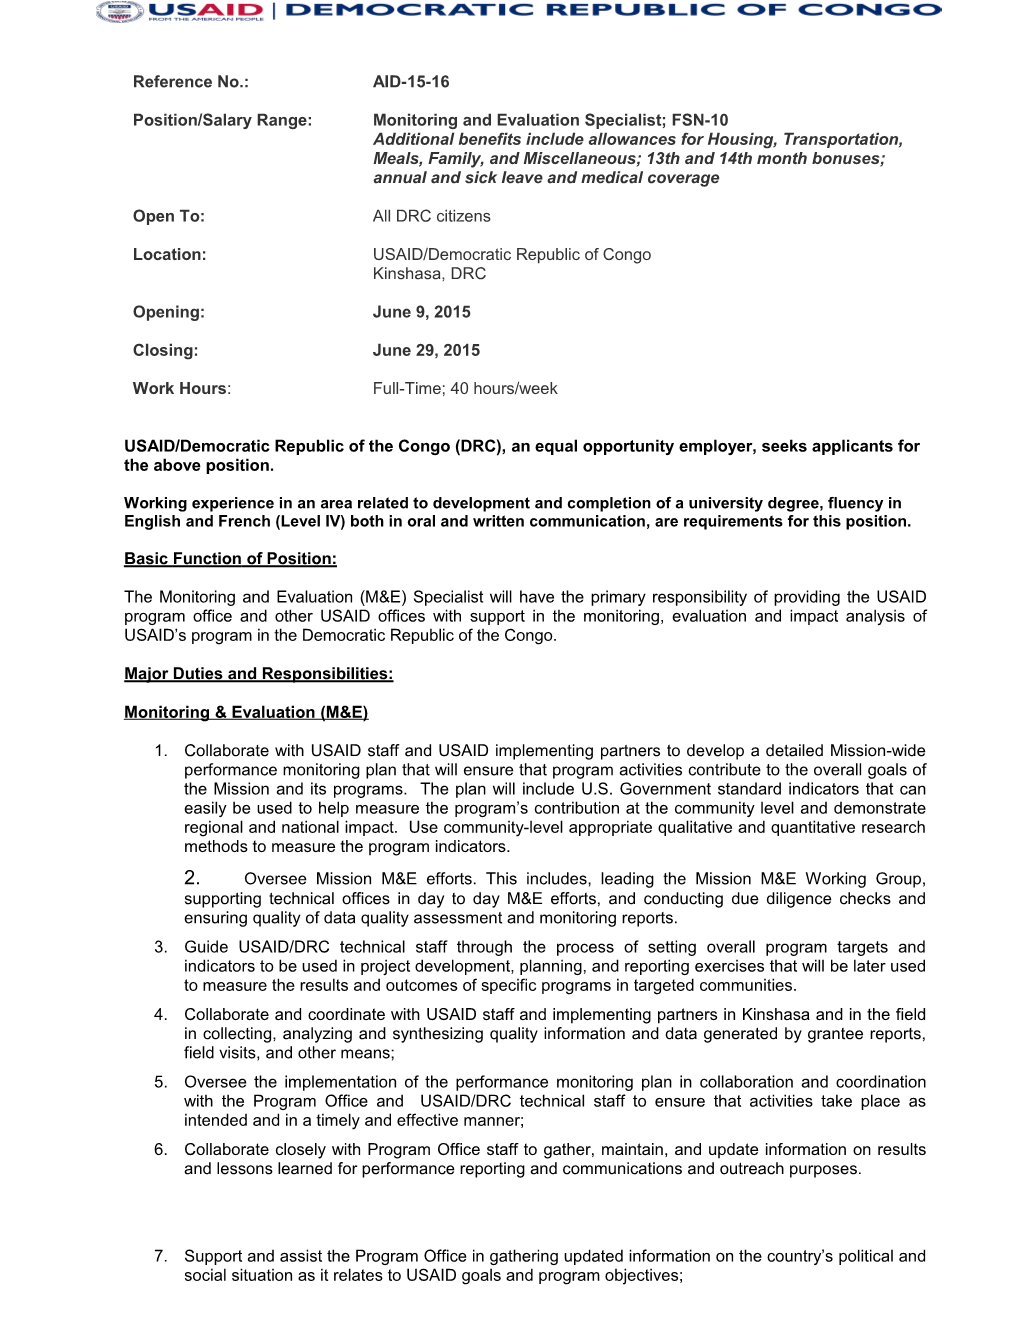 Position/Salaryrange:Monitoring and Evaluation Specialist;FSN-10